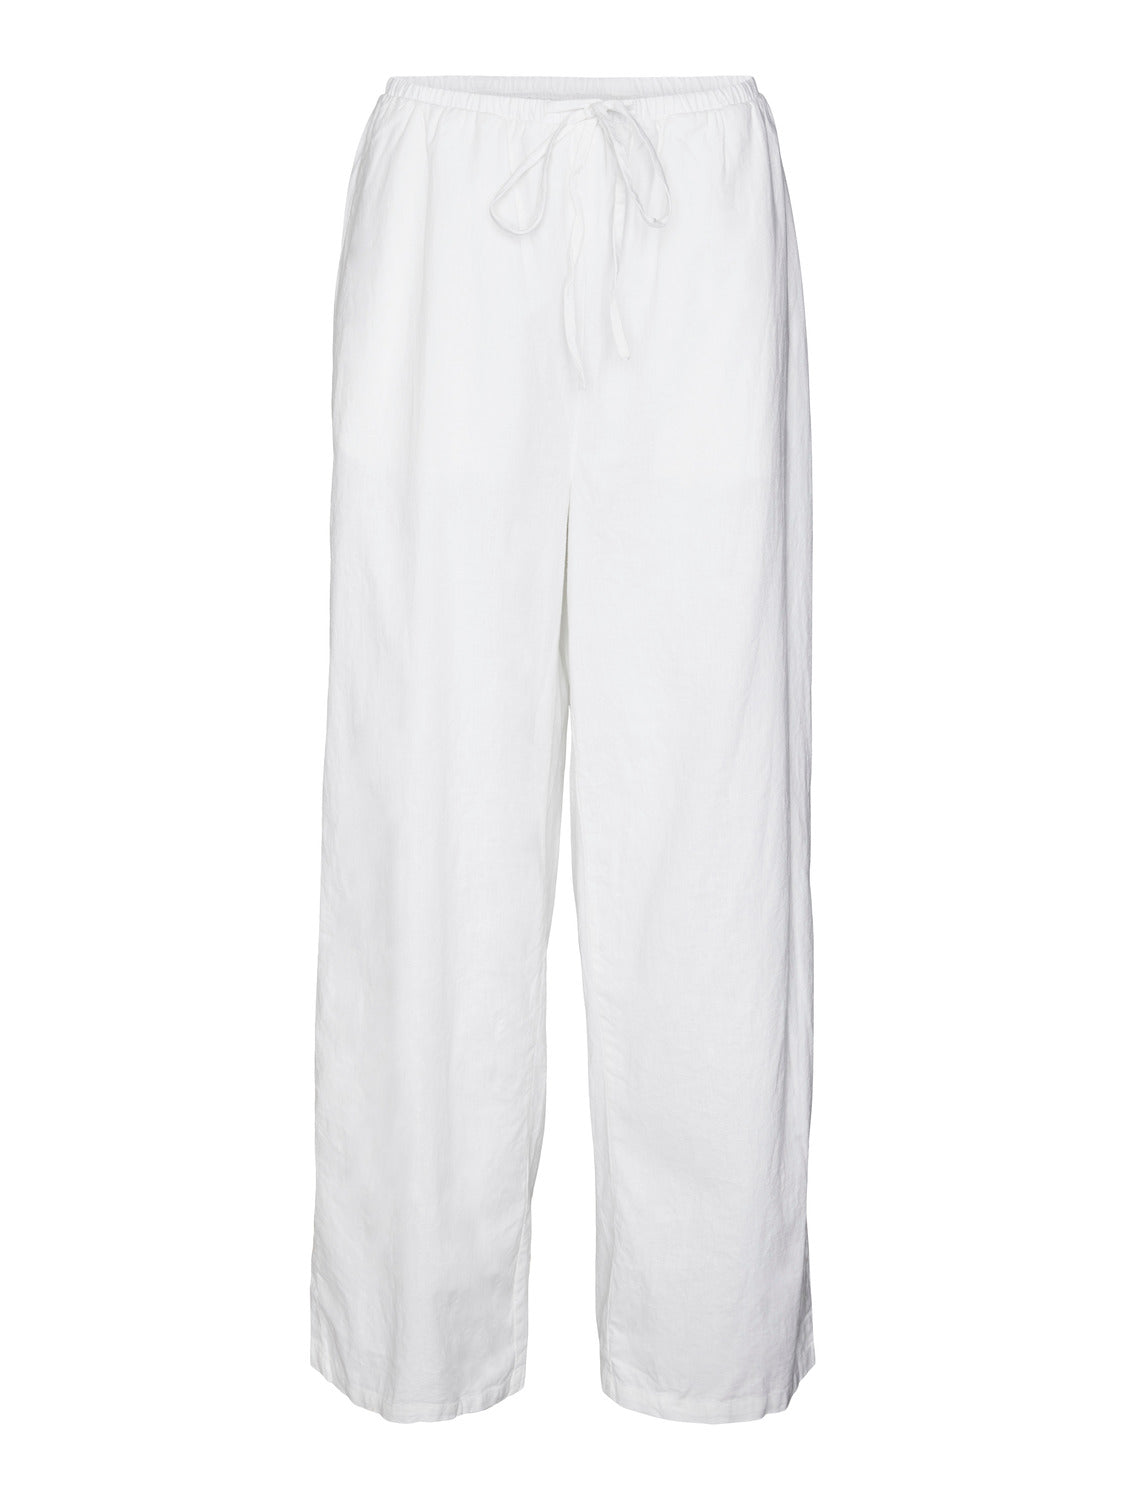 VMLUNA Pants - Bright White